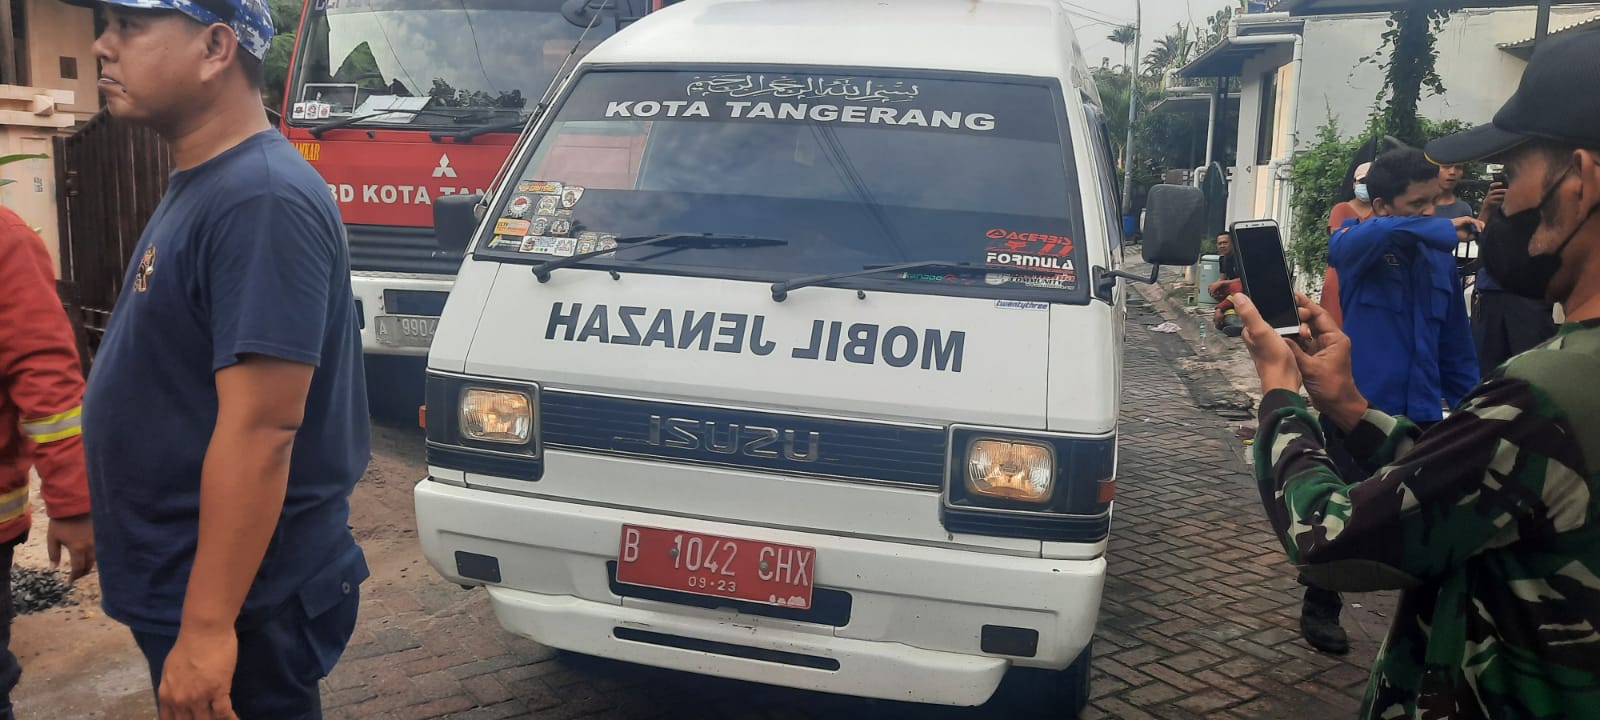 	Satu unit mobil jenazah saat tiba di lokasi terbakar nya rumah di perumahan Metland Puri Blok B 7 No 10, Kelurahan Petir, Kecamatan Cipondoh, Kota Tangerang.